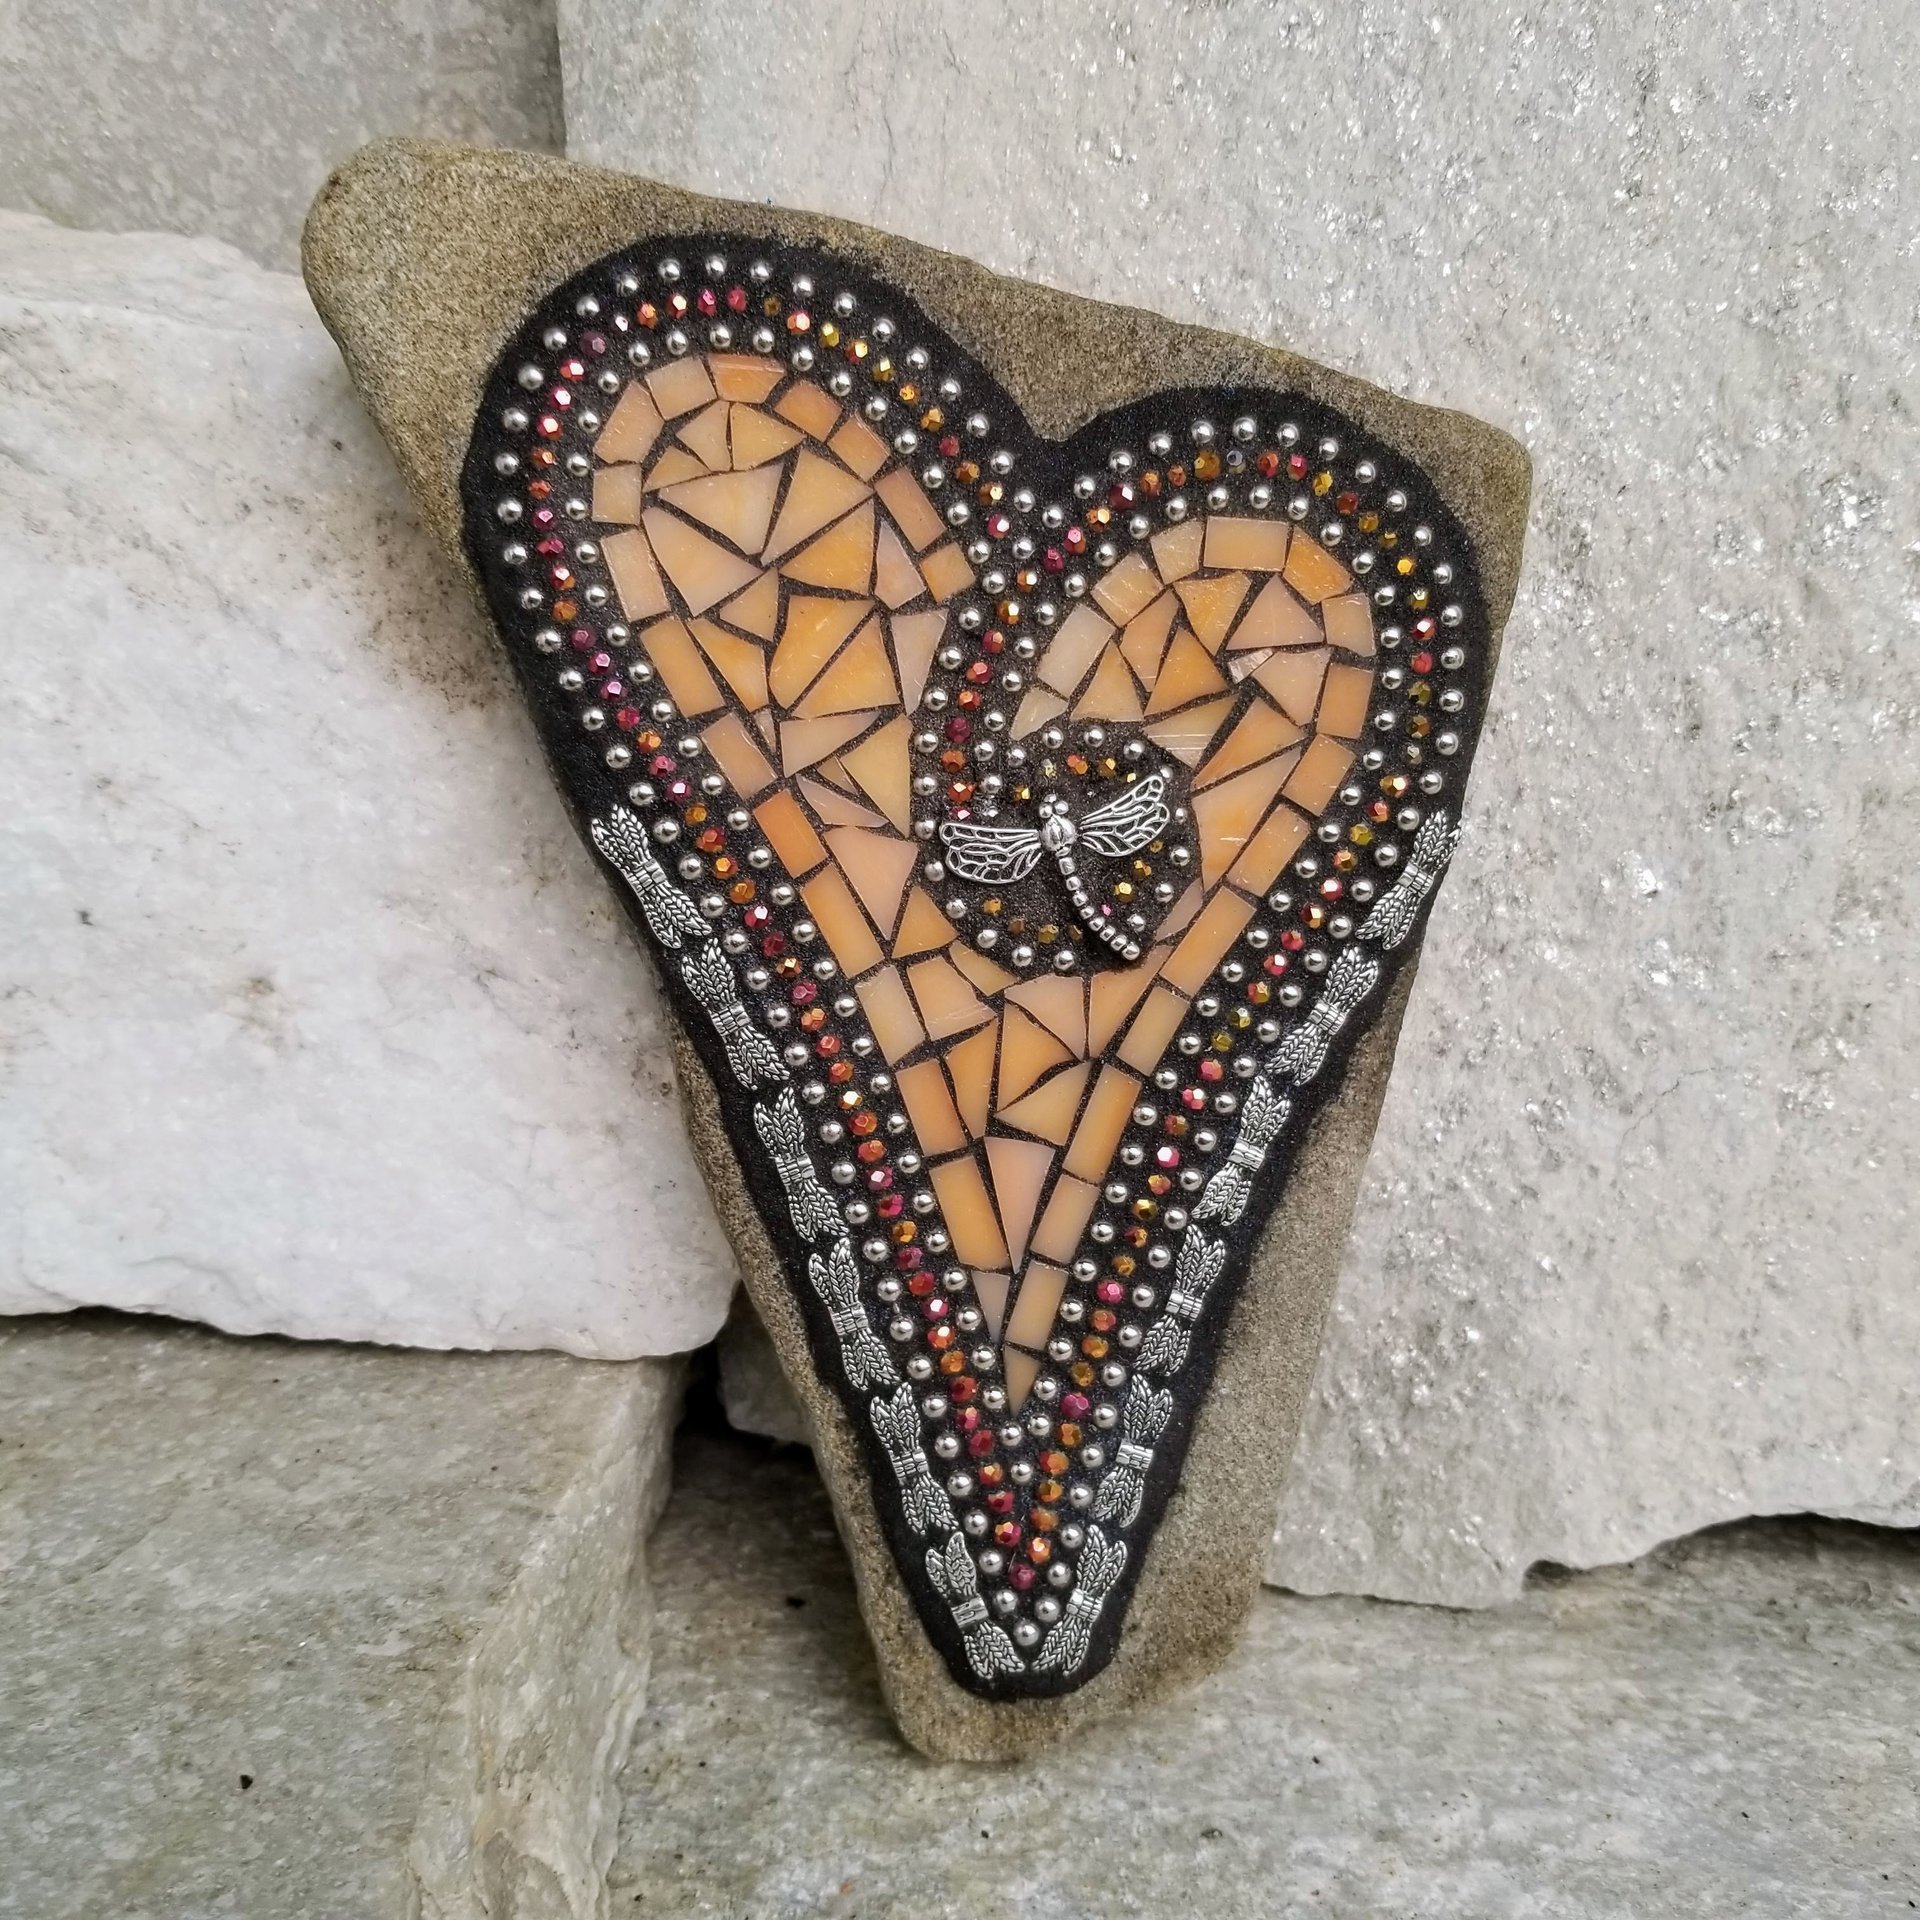 Orange Mosaic Heart Garden Stone with Dragonfly